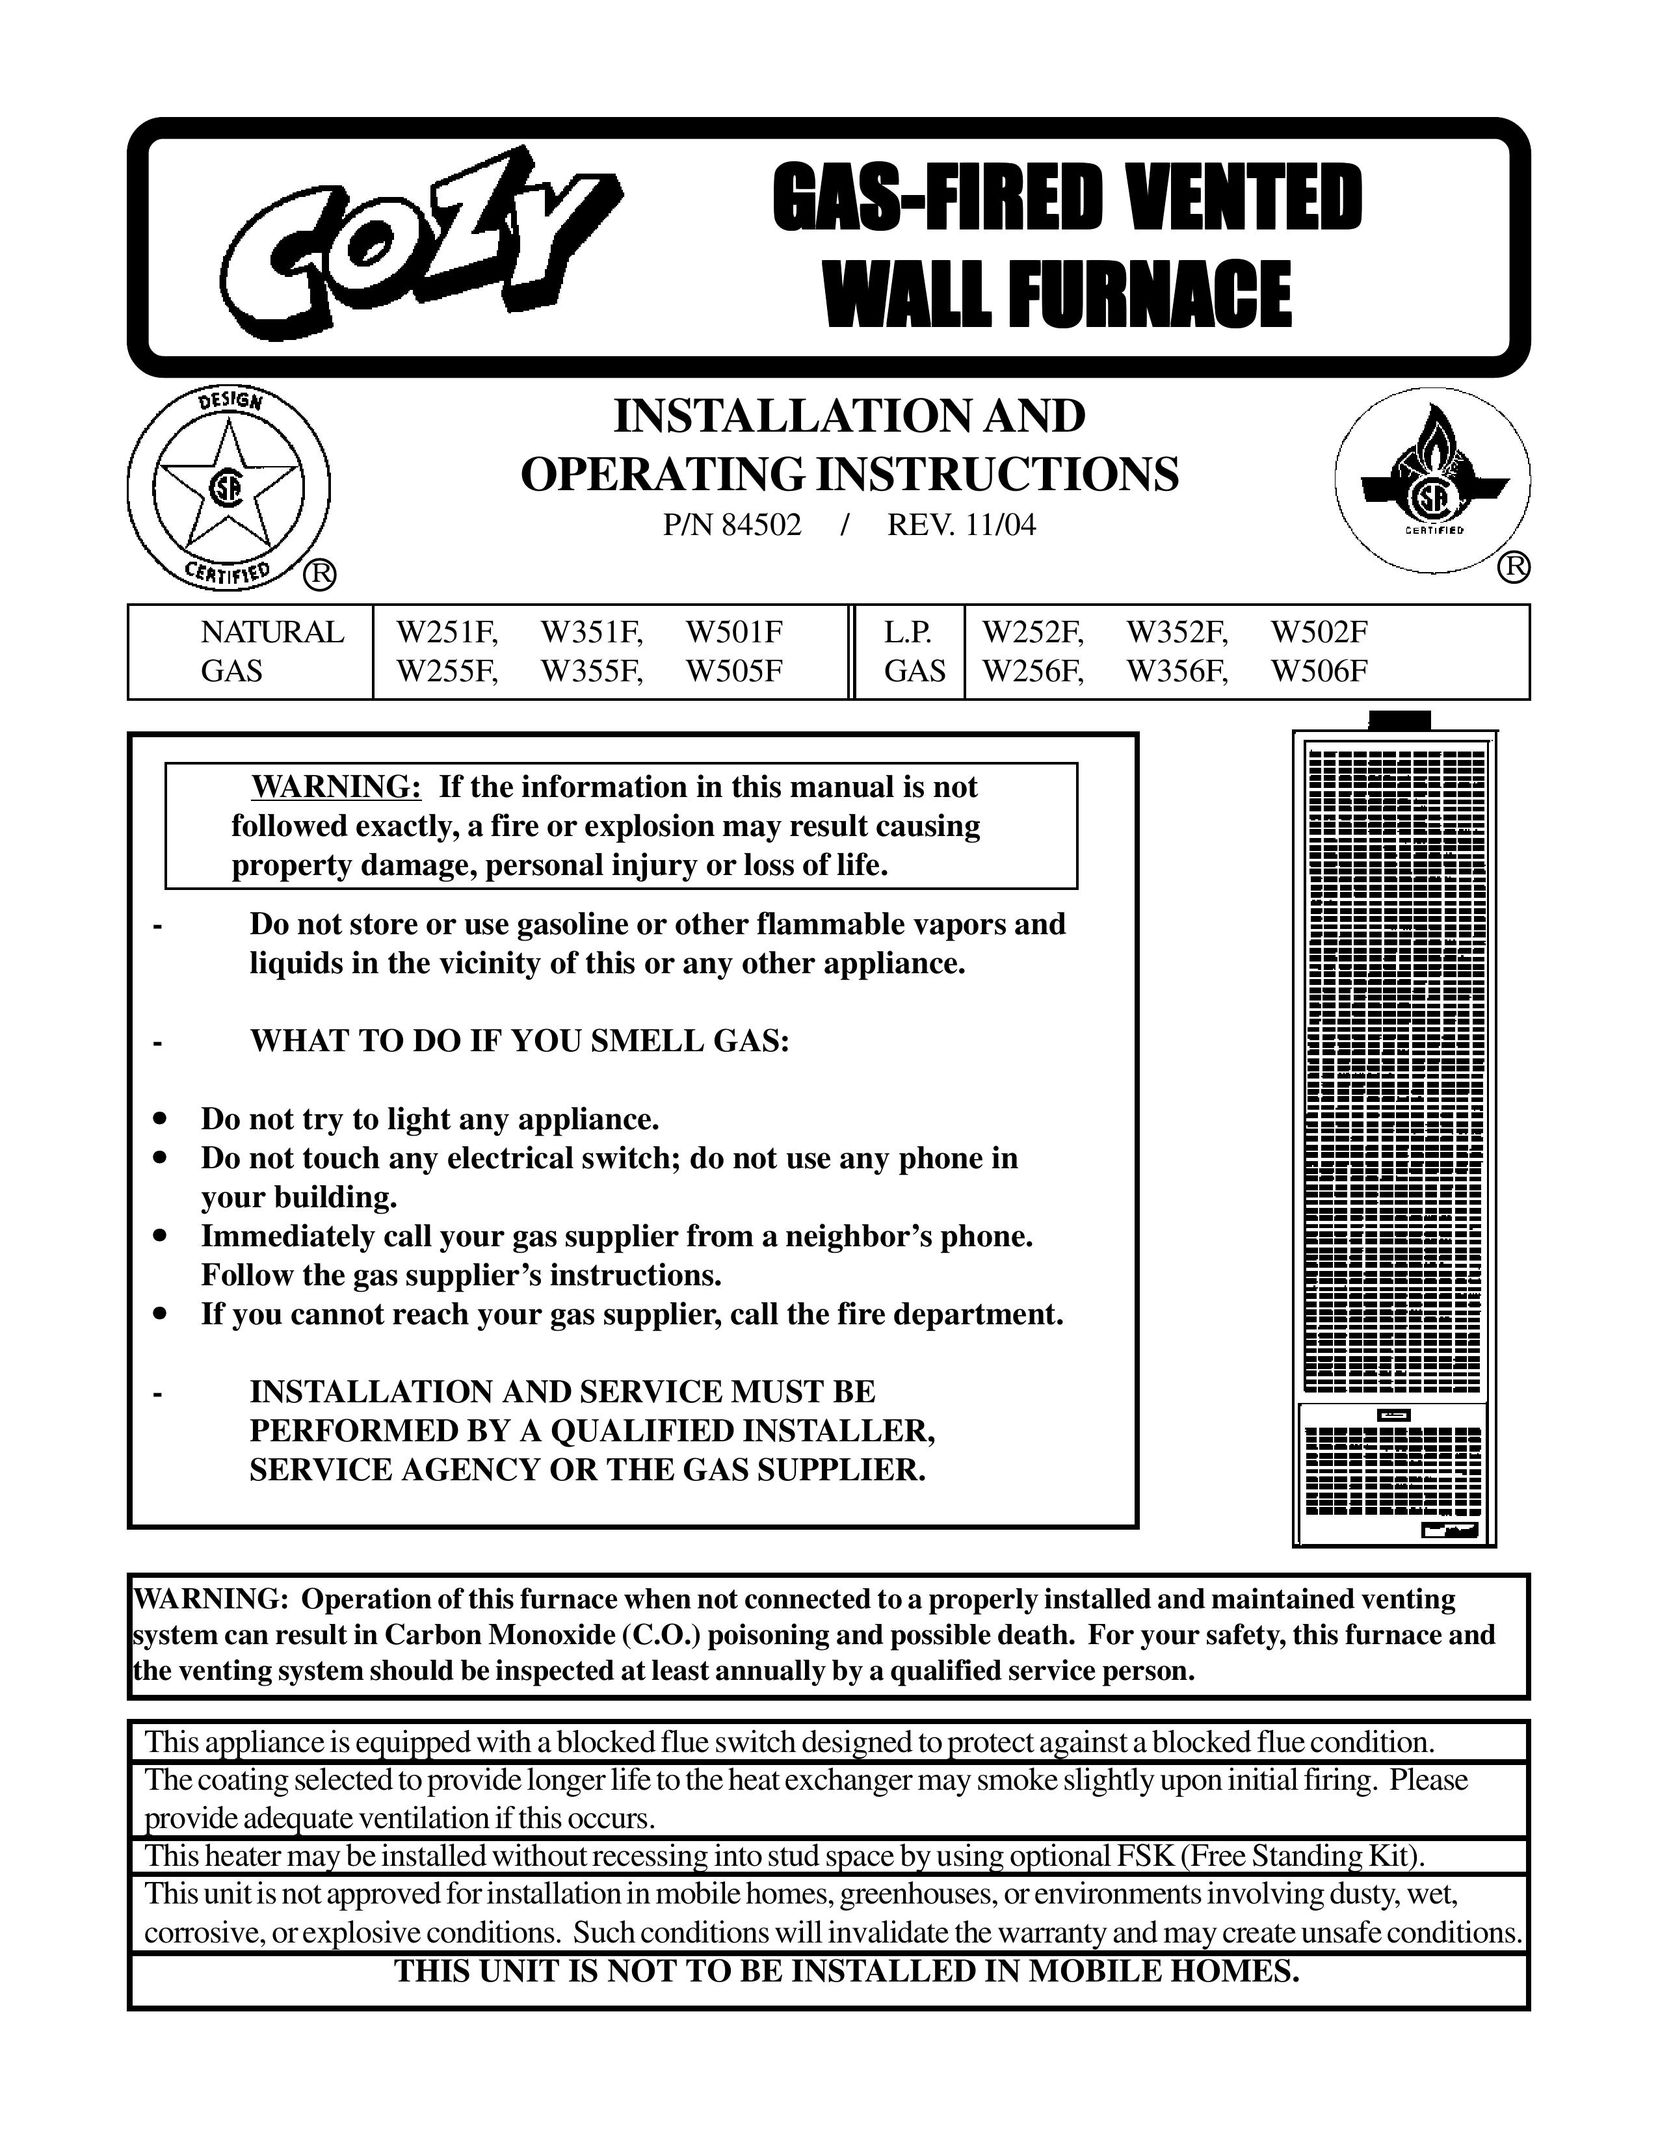 Louisville Tin and Stove W251F Furnace User Manual